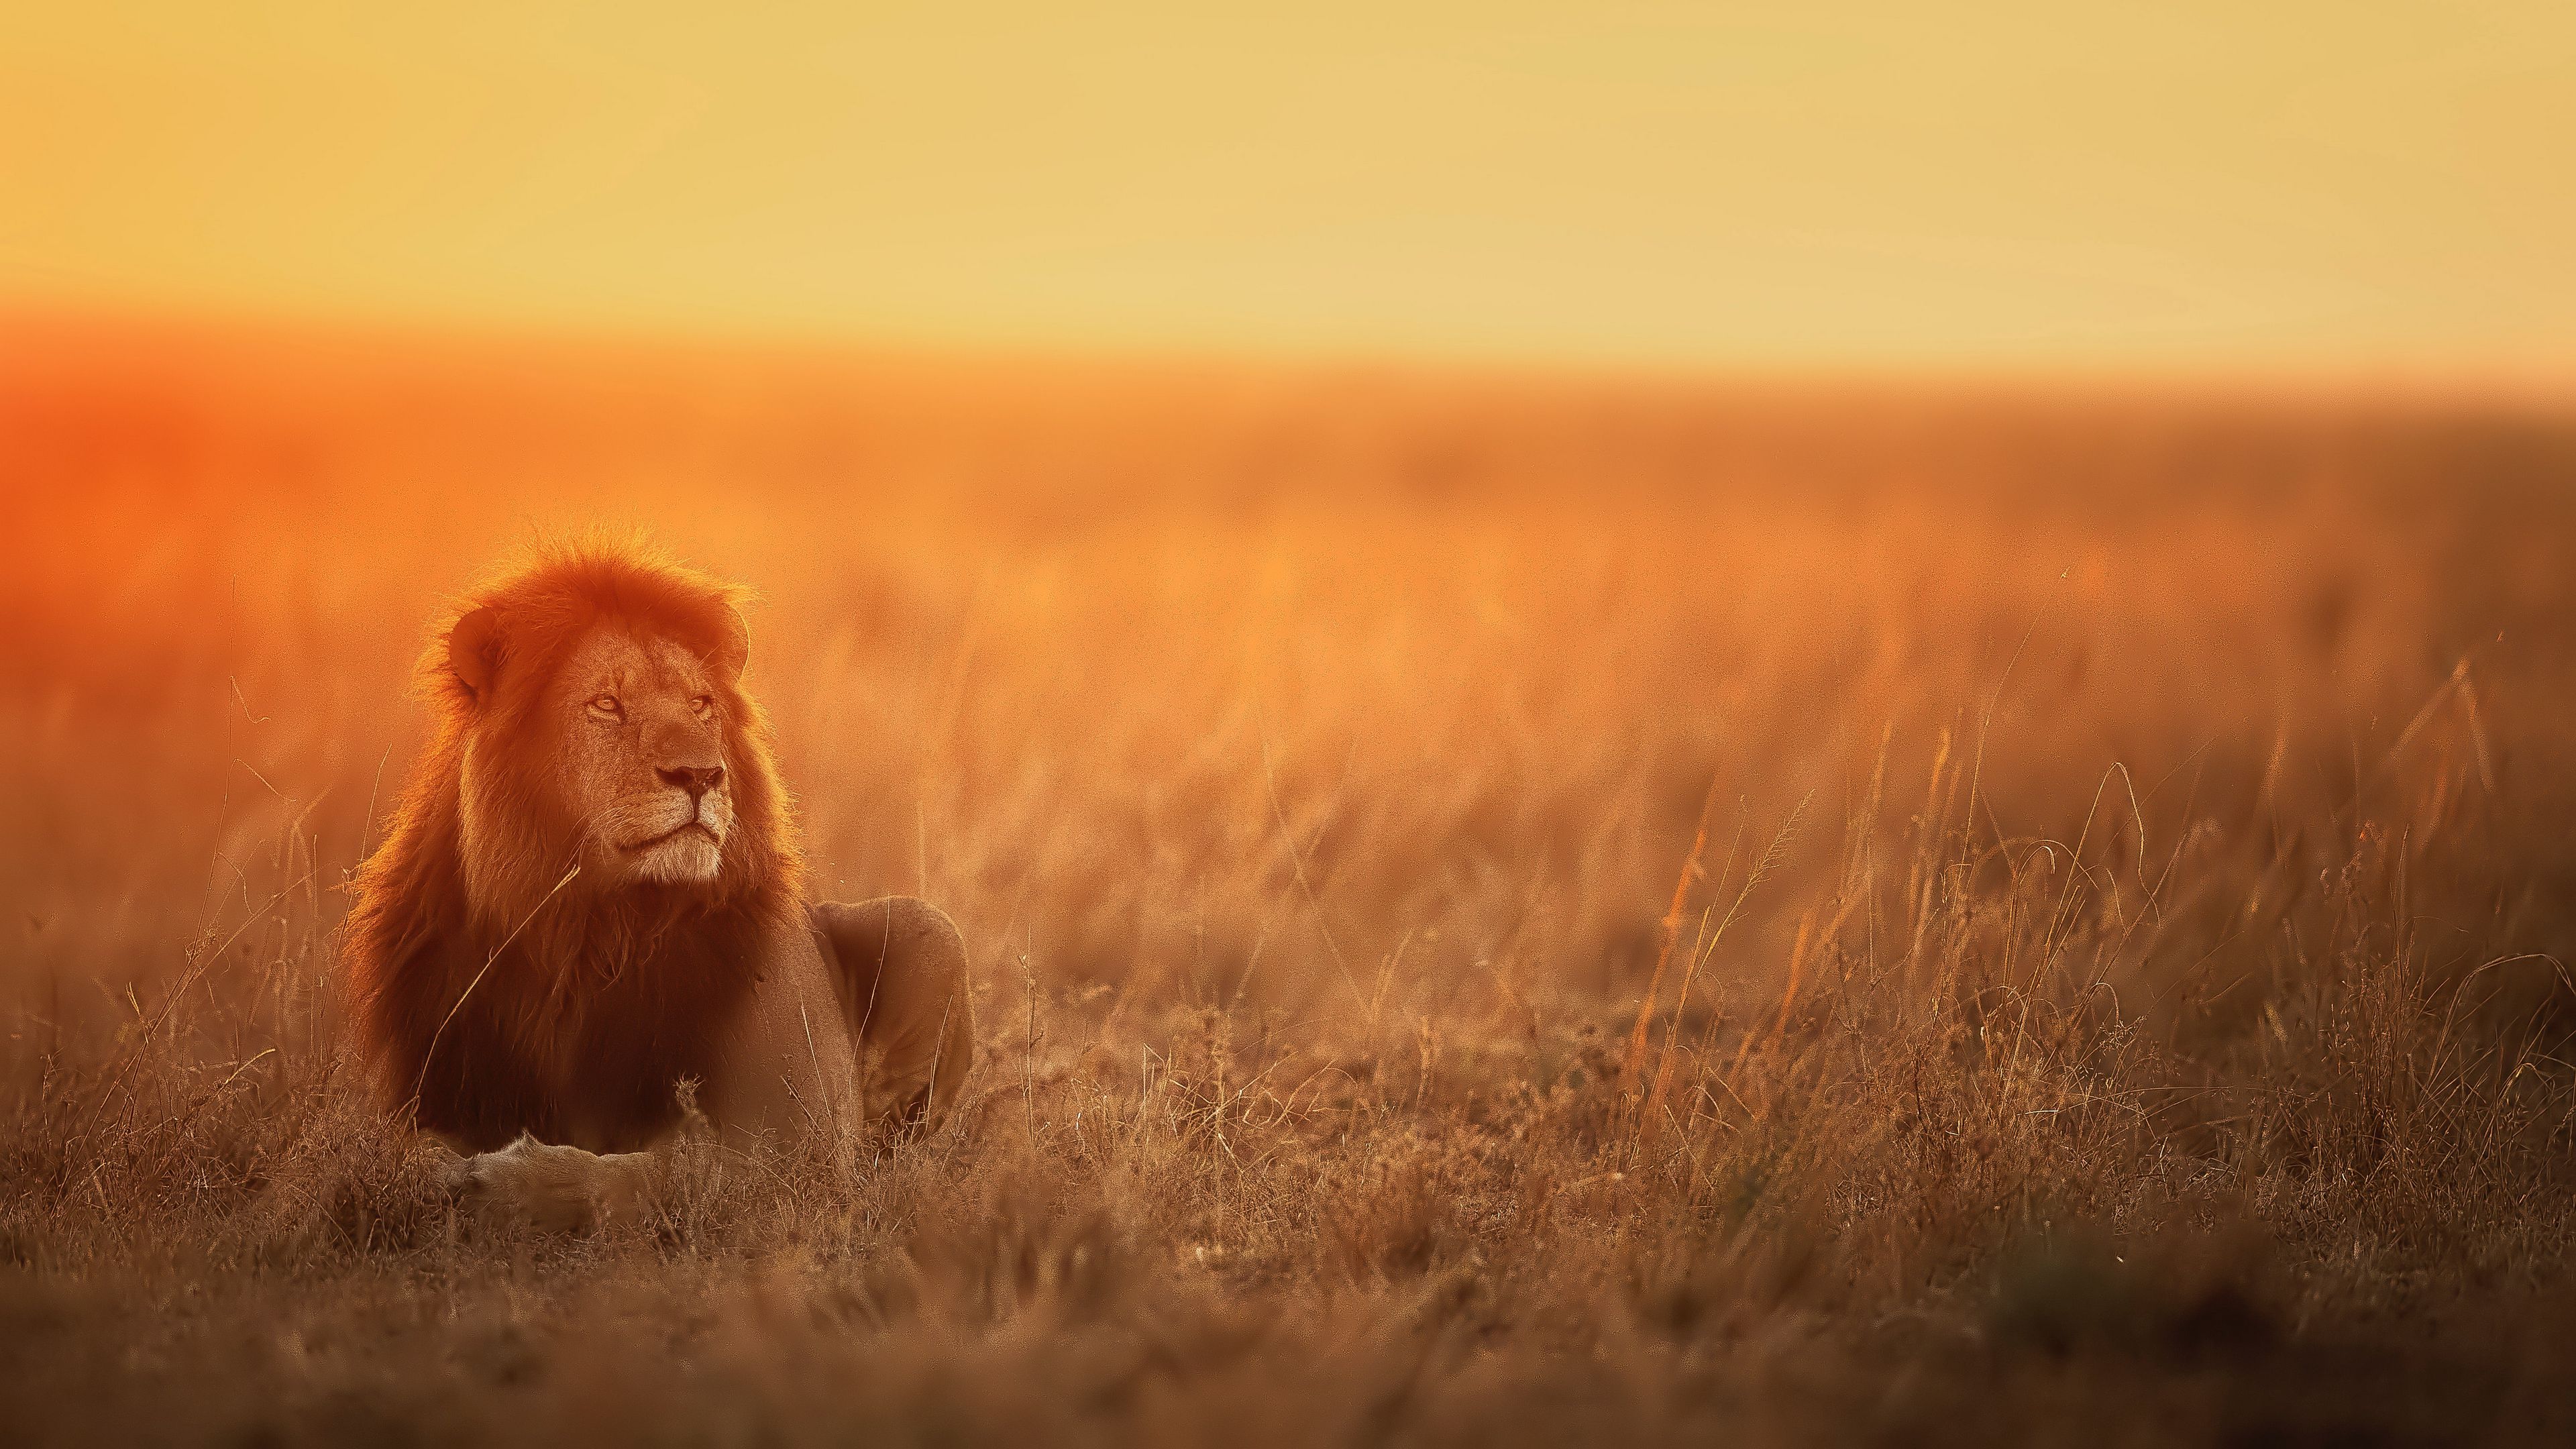 Download wallpaper 3840x2160 lion, predator, big cat, glance, sunset 4k uhd  16:9 hd background